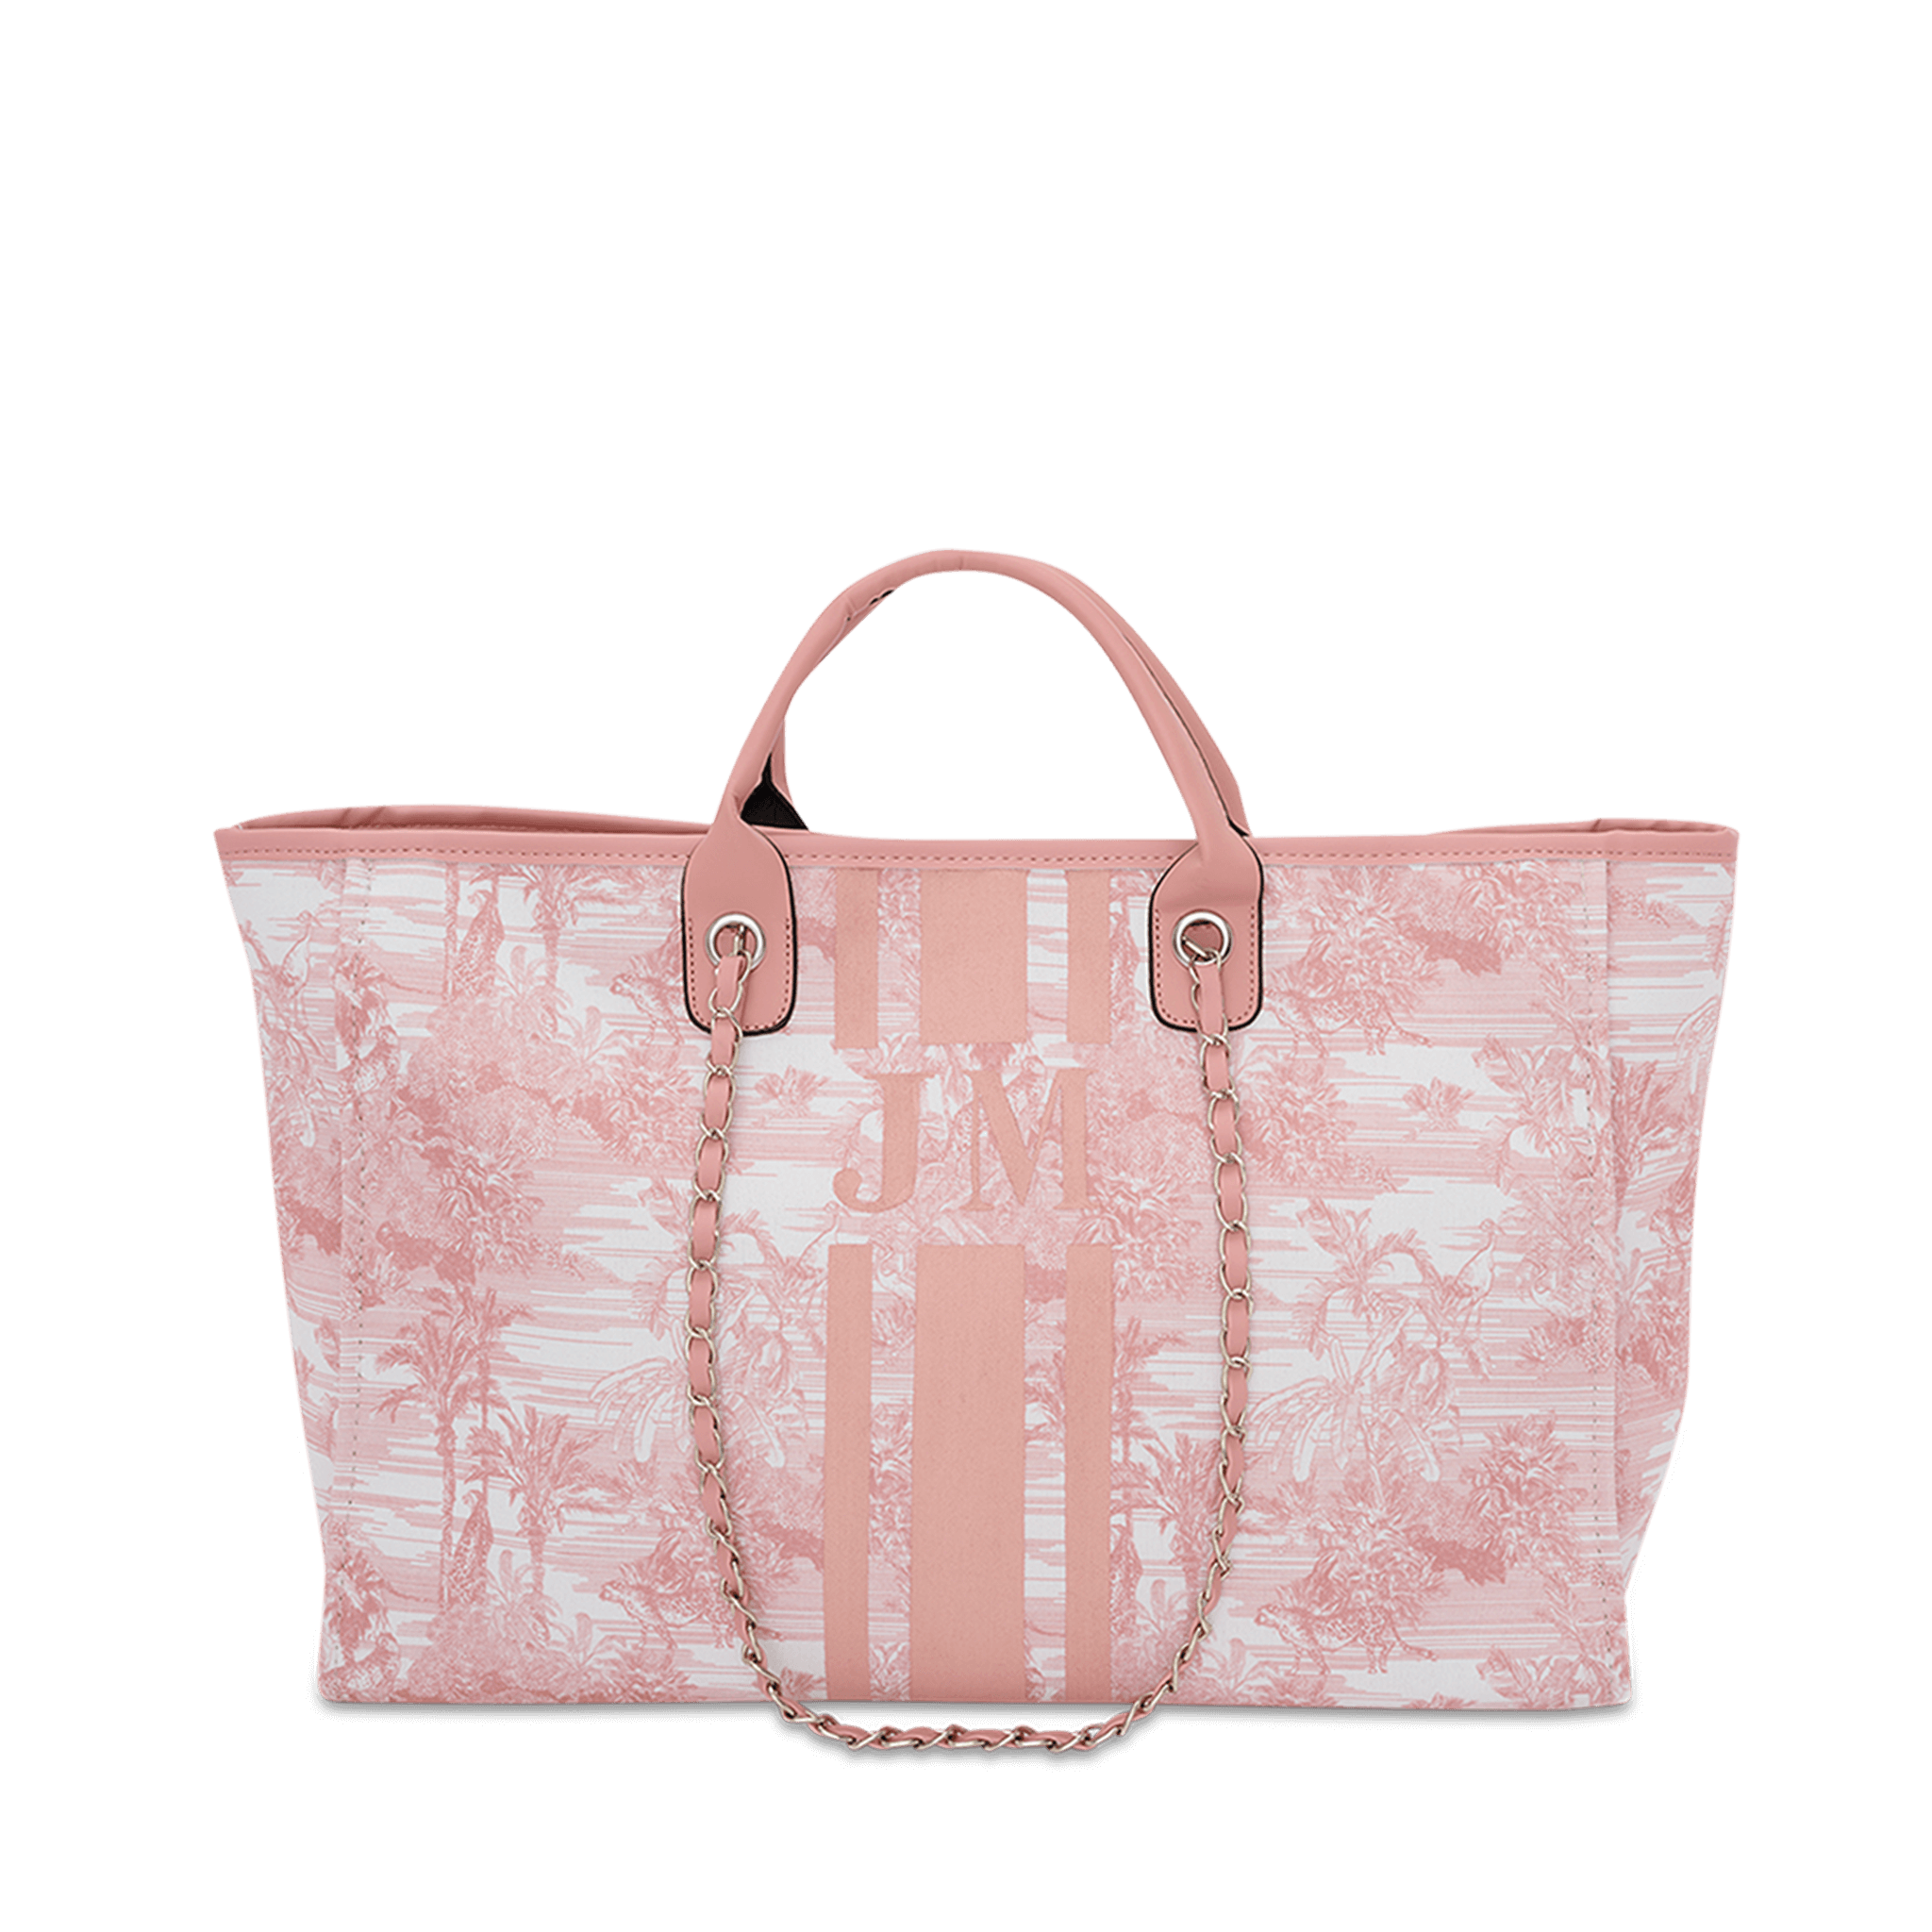 Lily & Bean Weekend Tropical Stripe Bag Pink